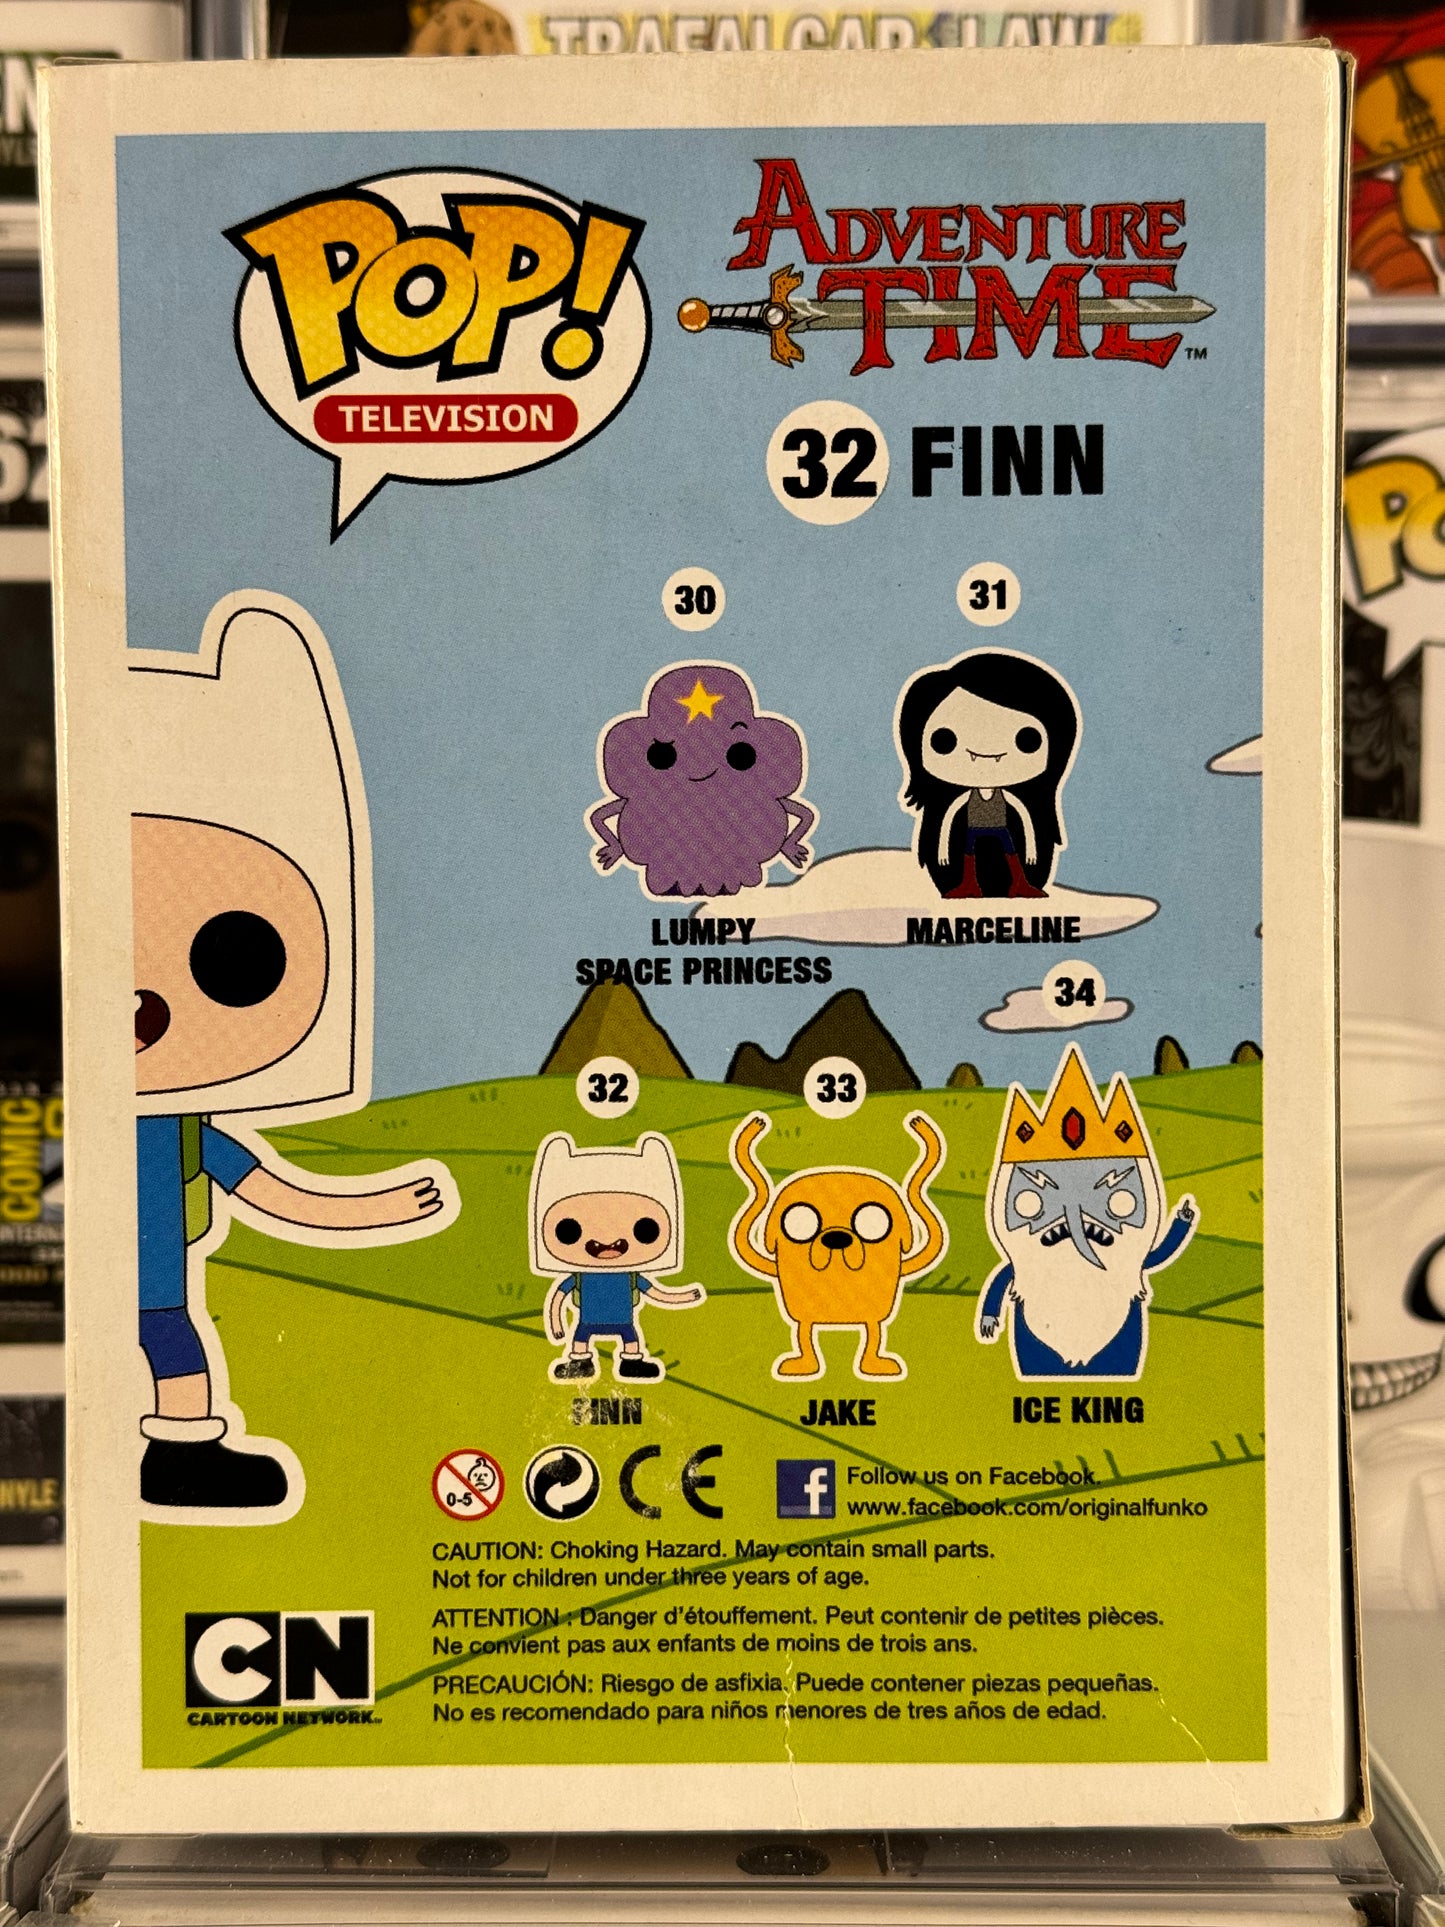 Adventure Time - Finn (32) Vaulted